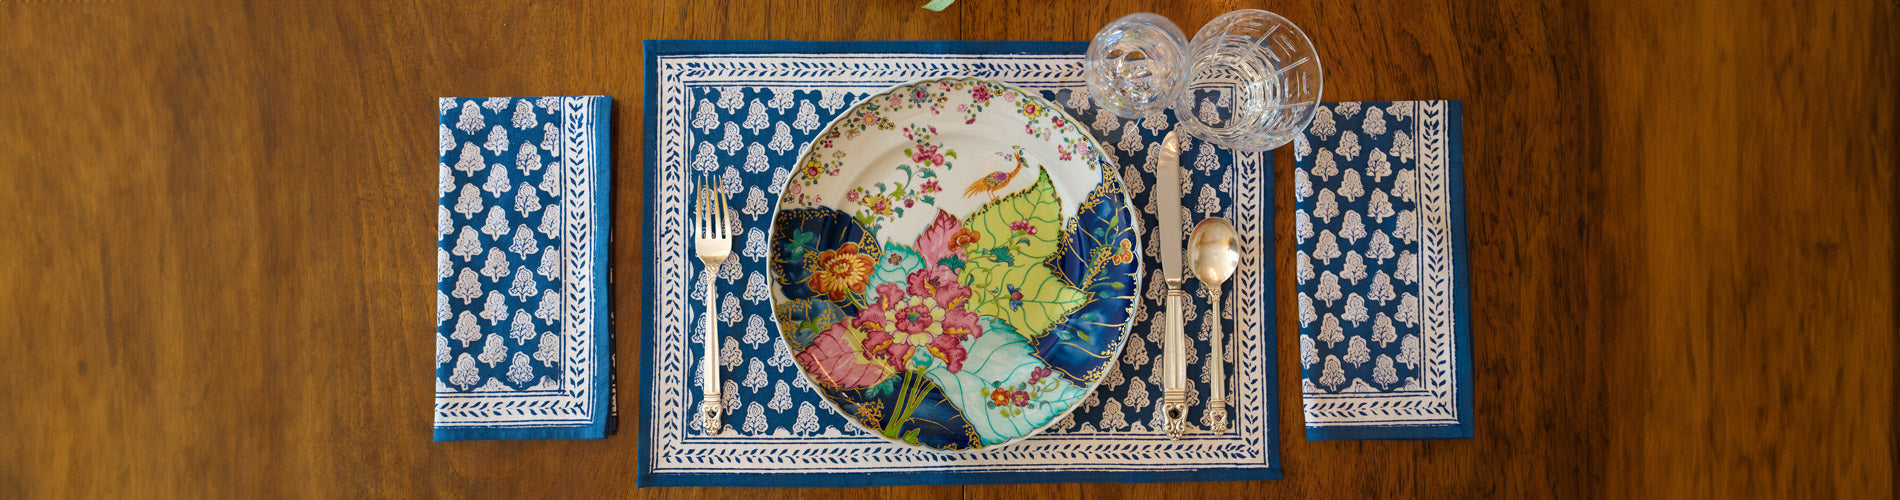 Blue Table Linens For Hanukkah | Pomegranate Inc.